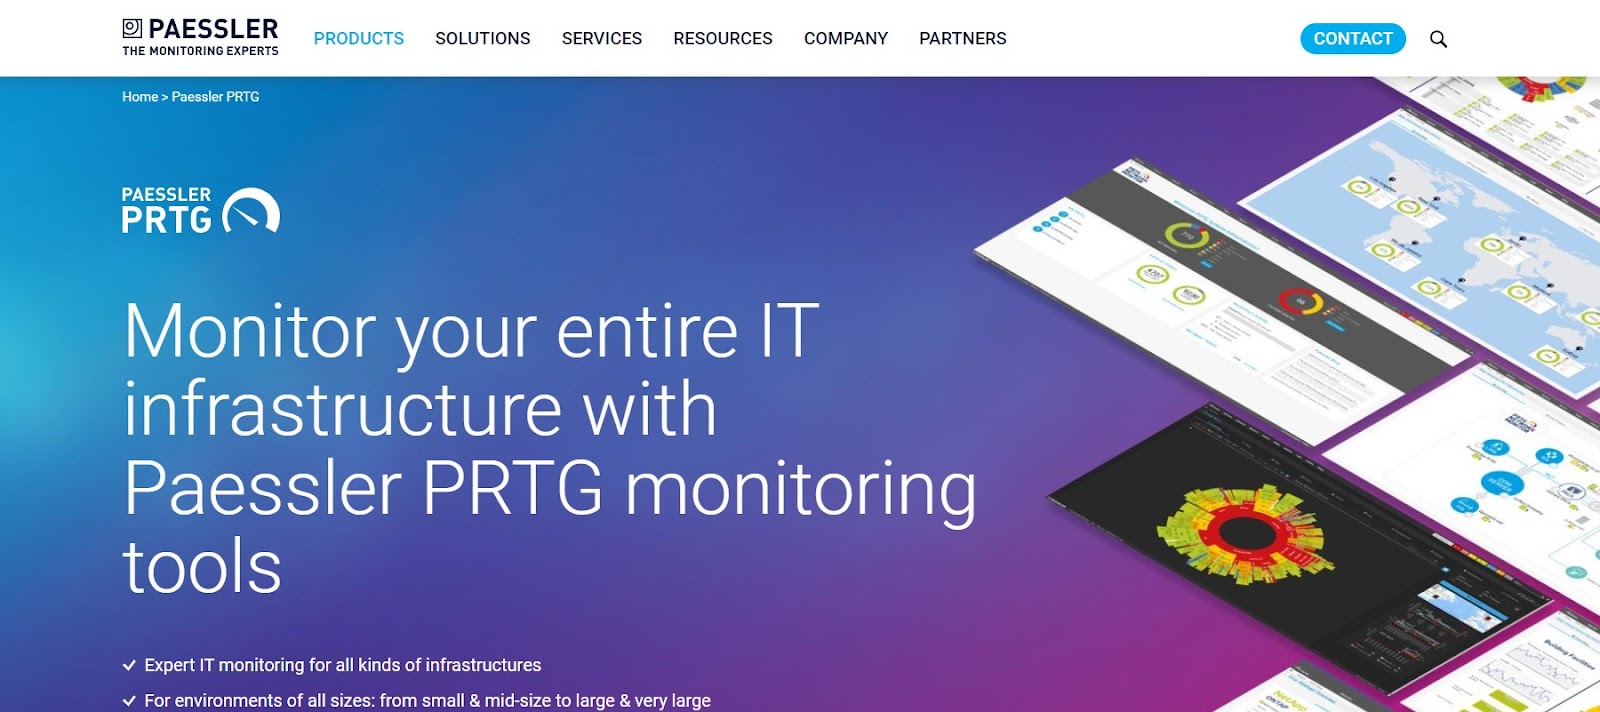 PRTG network monitoring software